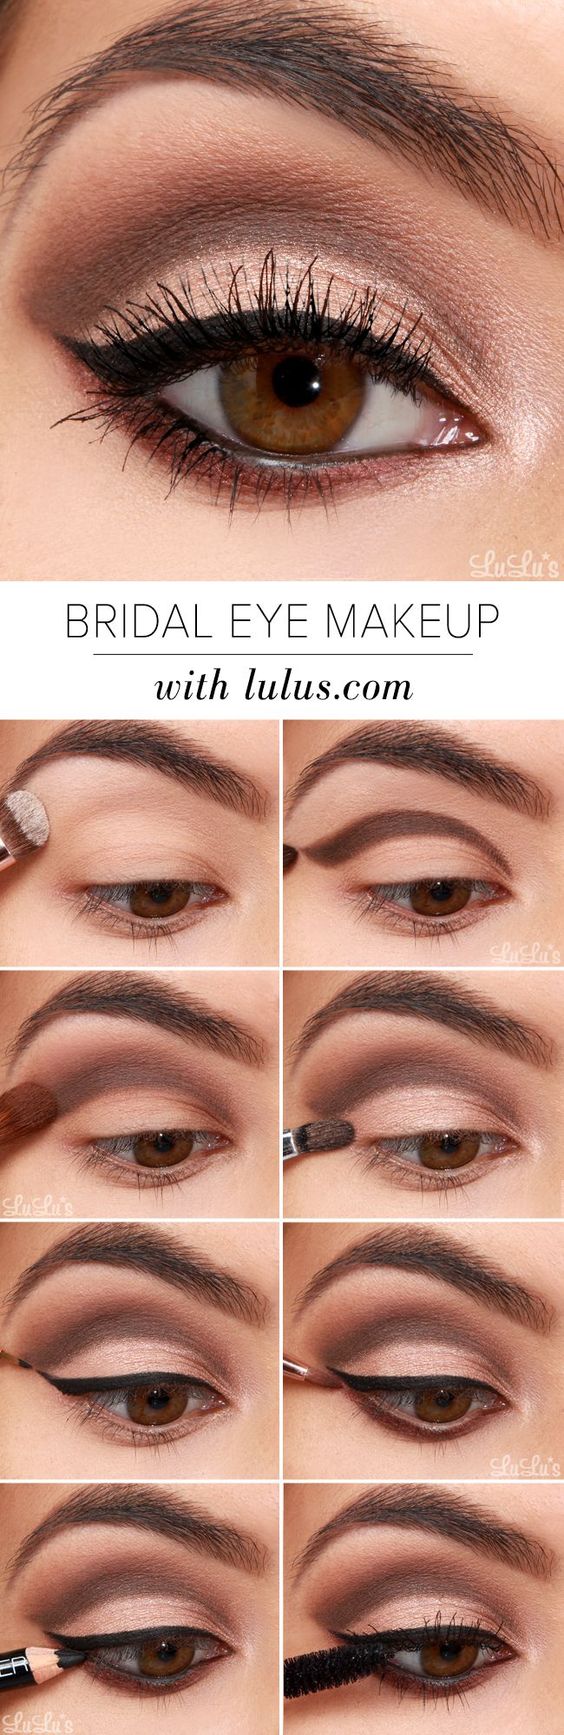 bridal-eye-makeup via